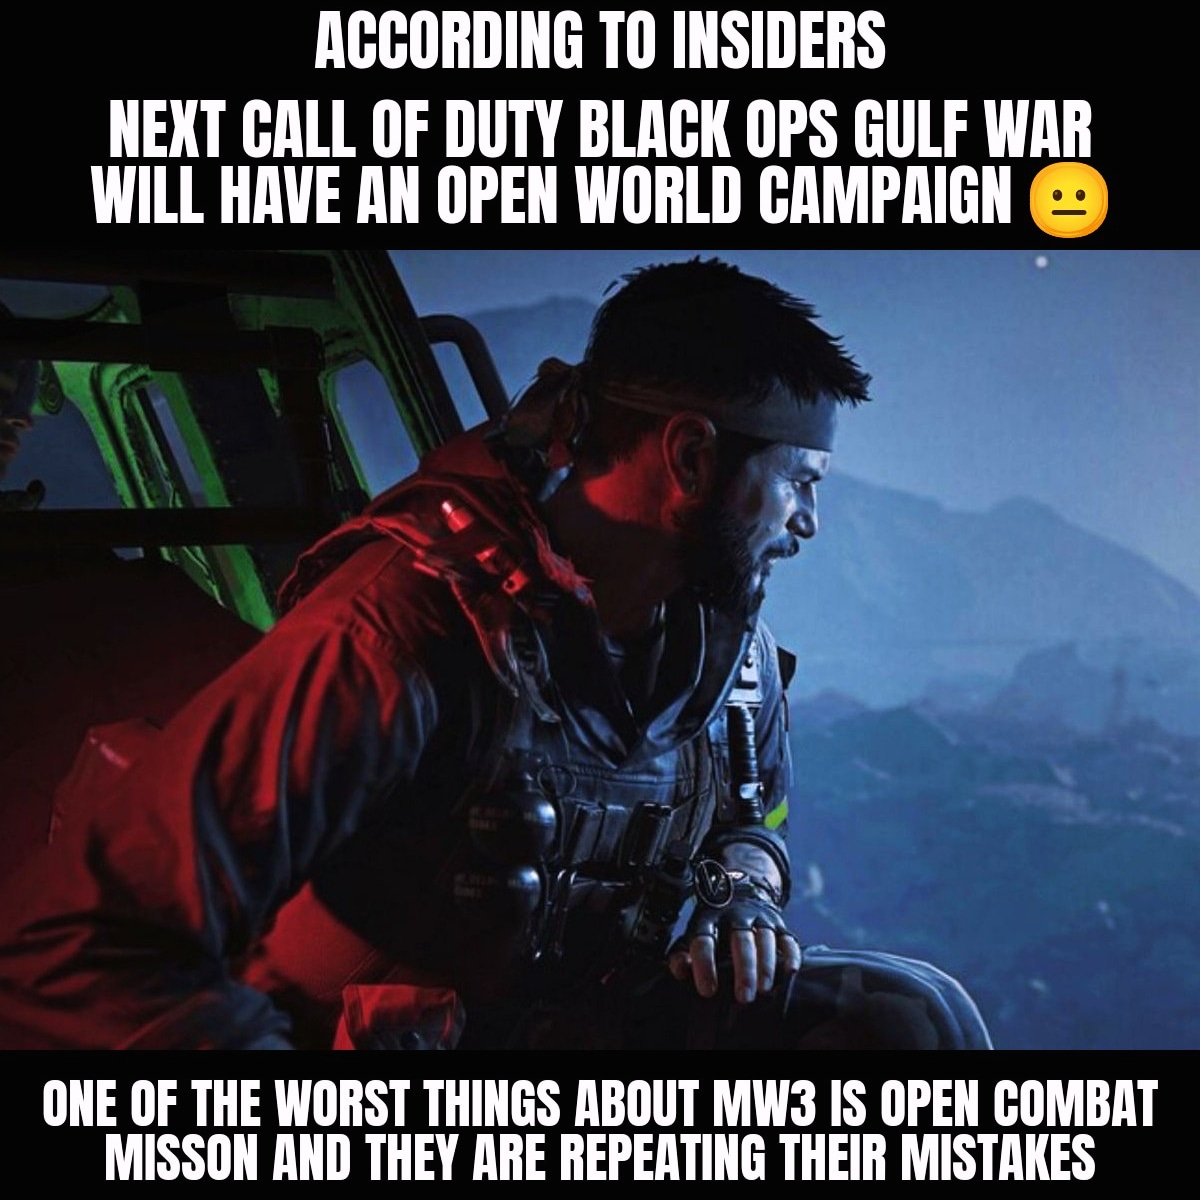 Are you ready for open world call of Duty Campaign?? 🫤

#callofdutymemes #callofduty #codblackops #callofdutyblackopsgulfwar #openworldgames #calloffutycoldwar